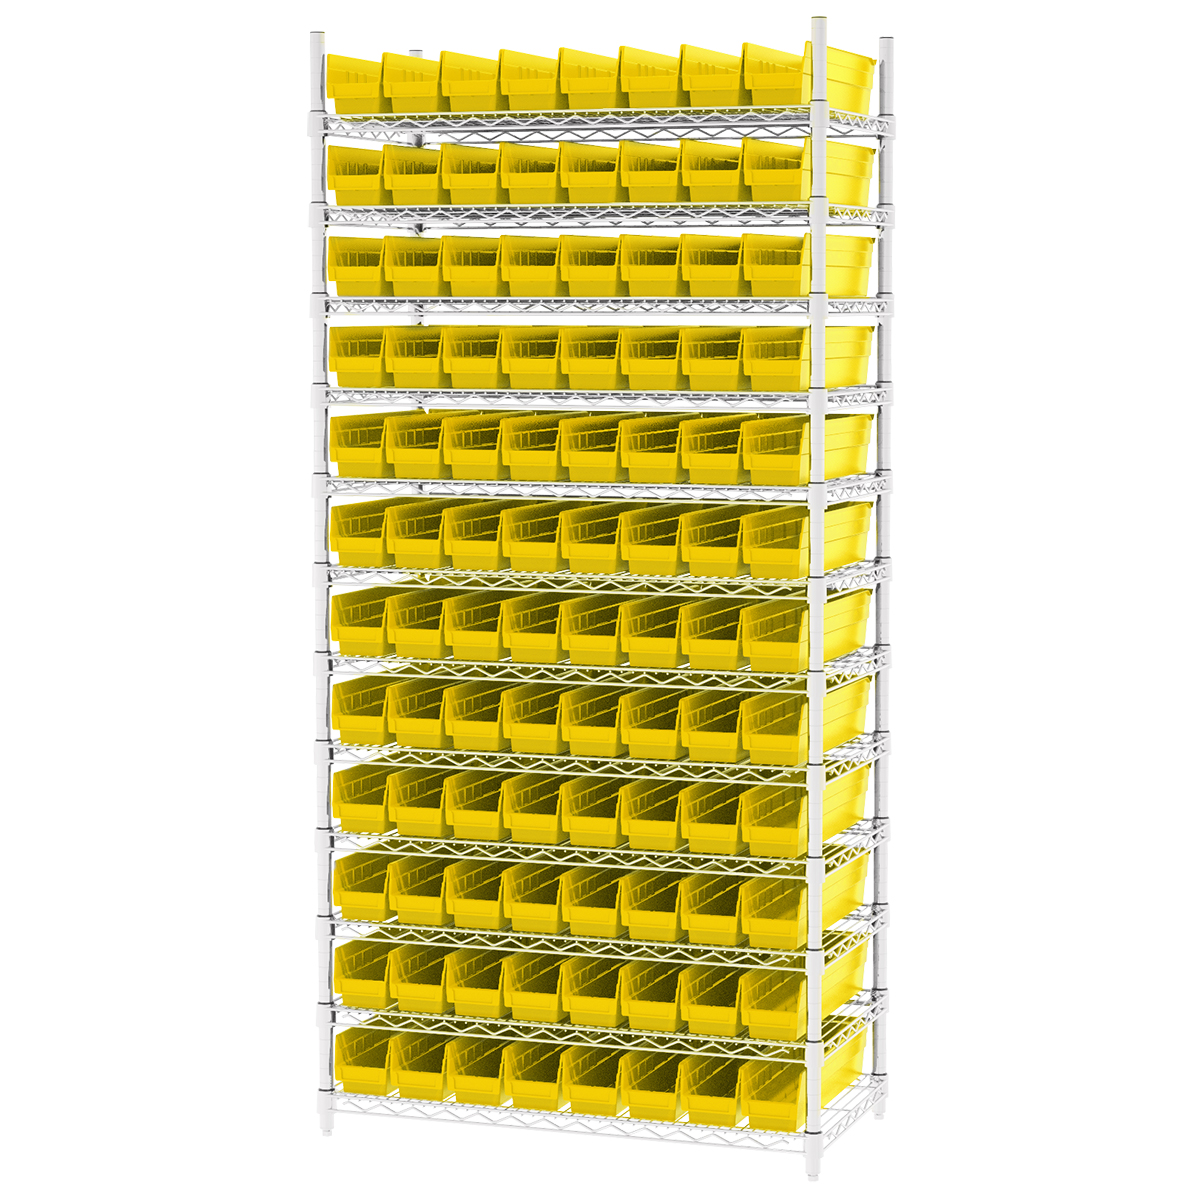 QUANTUM STORAGE SYSTEMS 1875-103 Shelf Bin Shelving System Type, Yellow  Color, Steel/Plastic Material Storage Bin